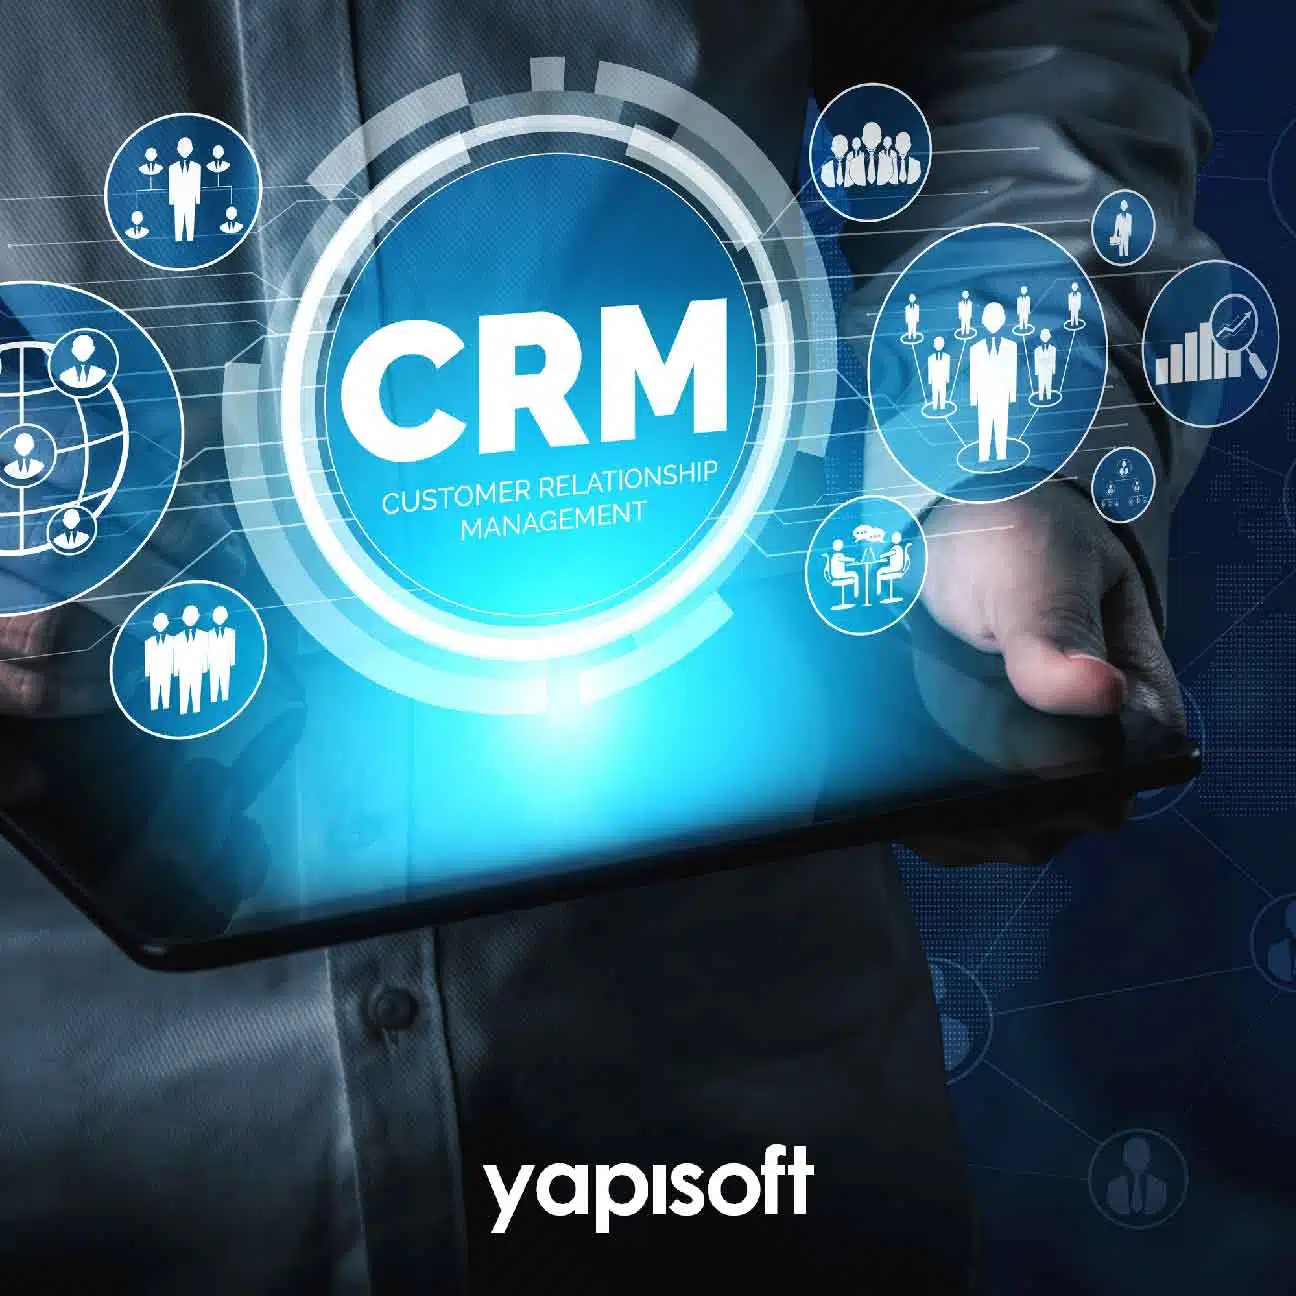 crm customer relationship management business sales marketing system concept